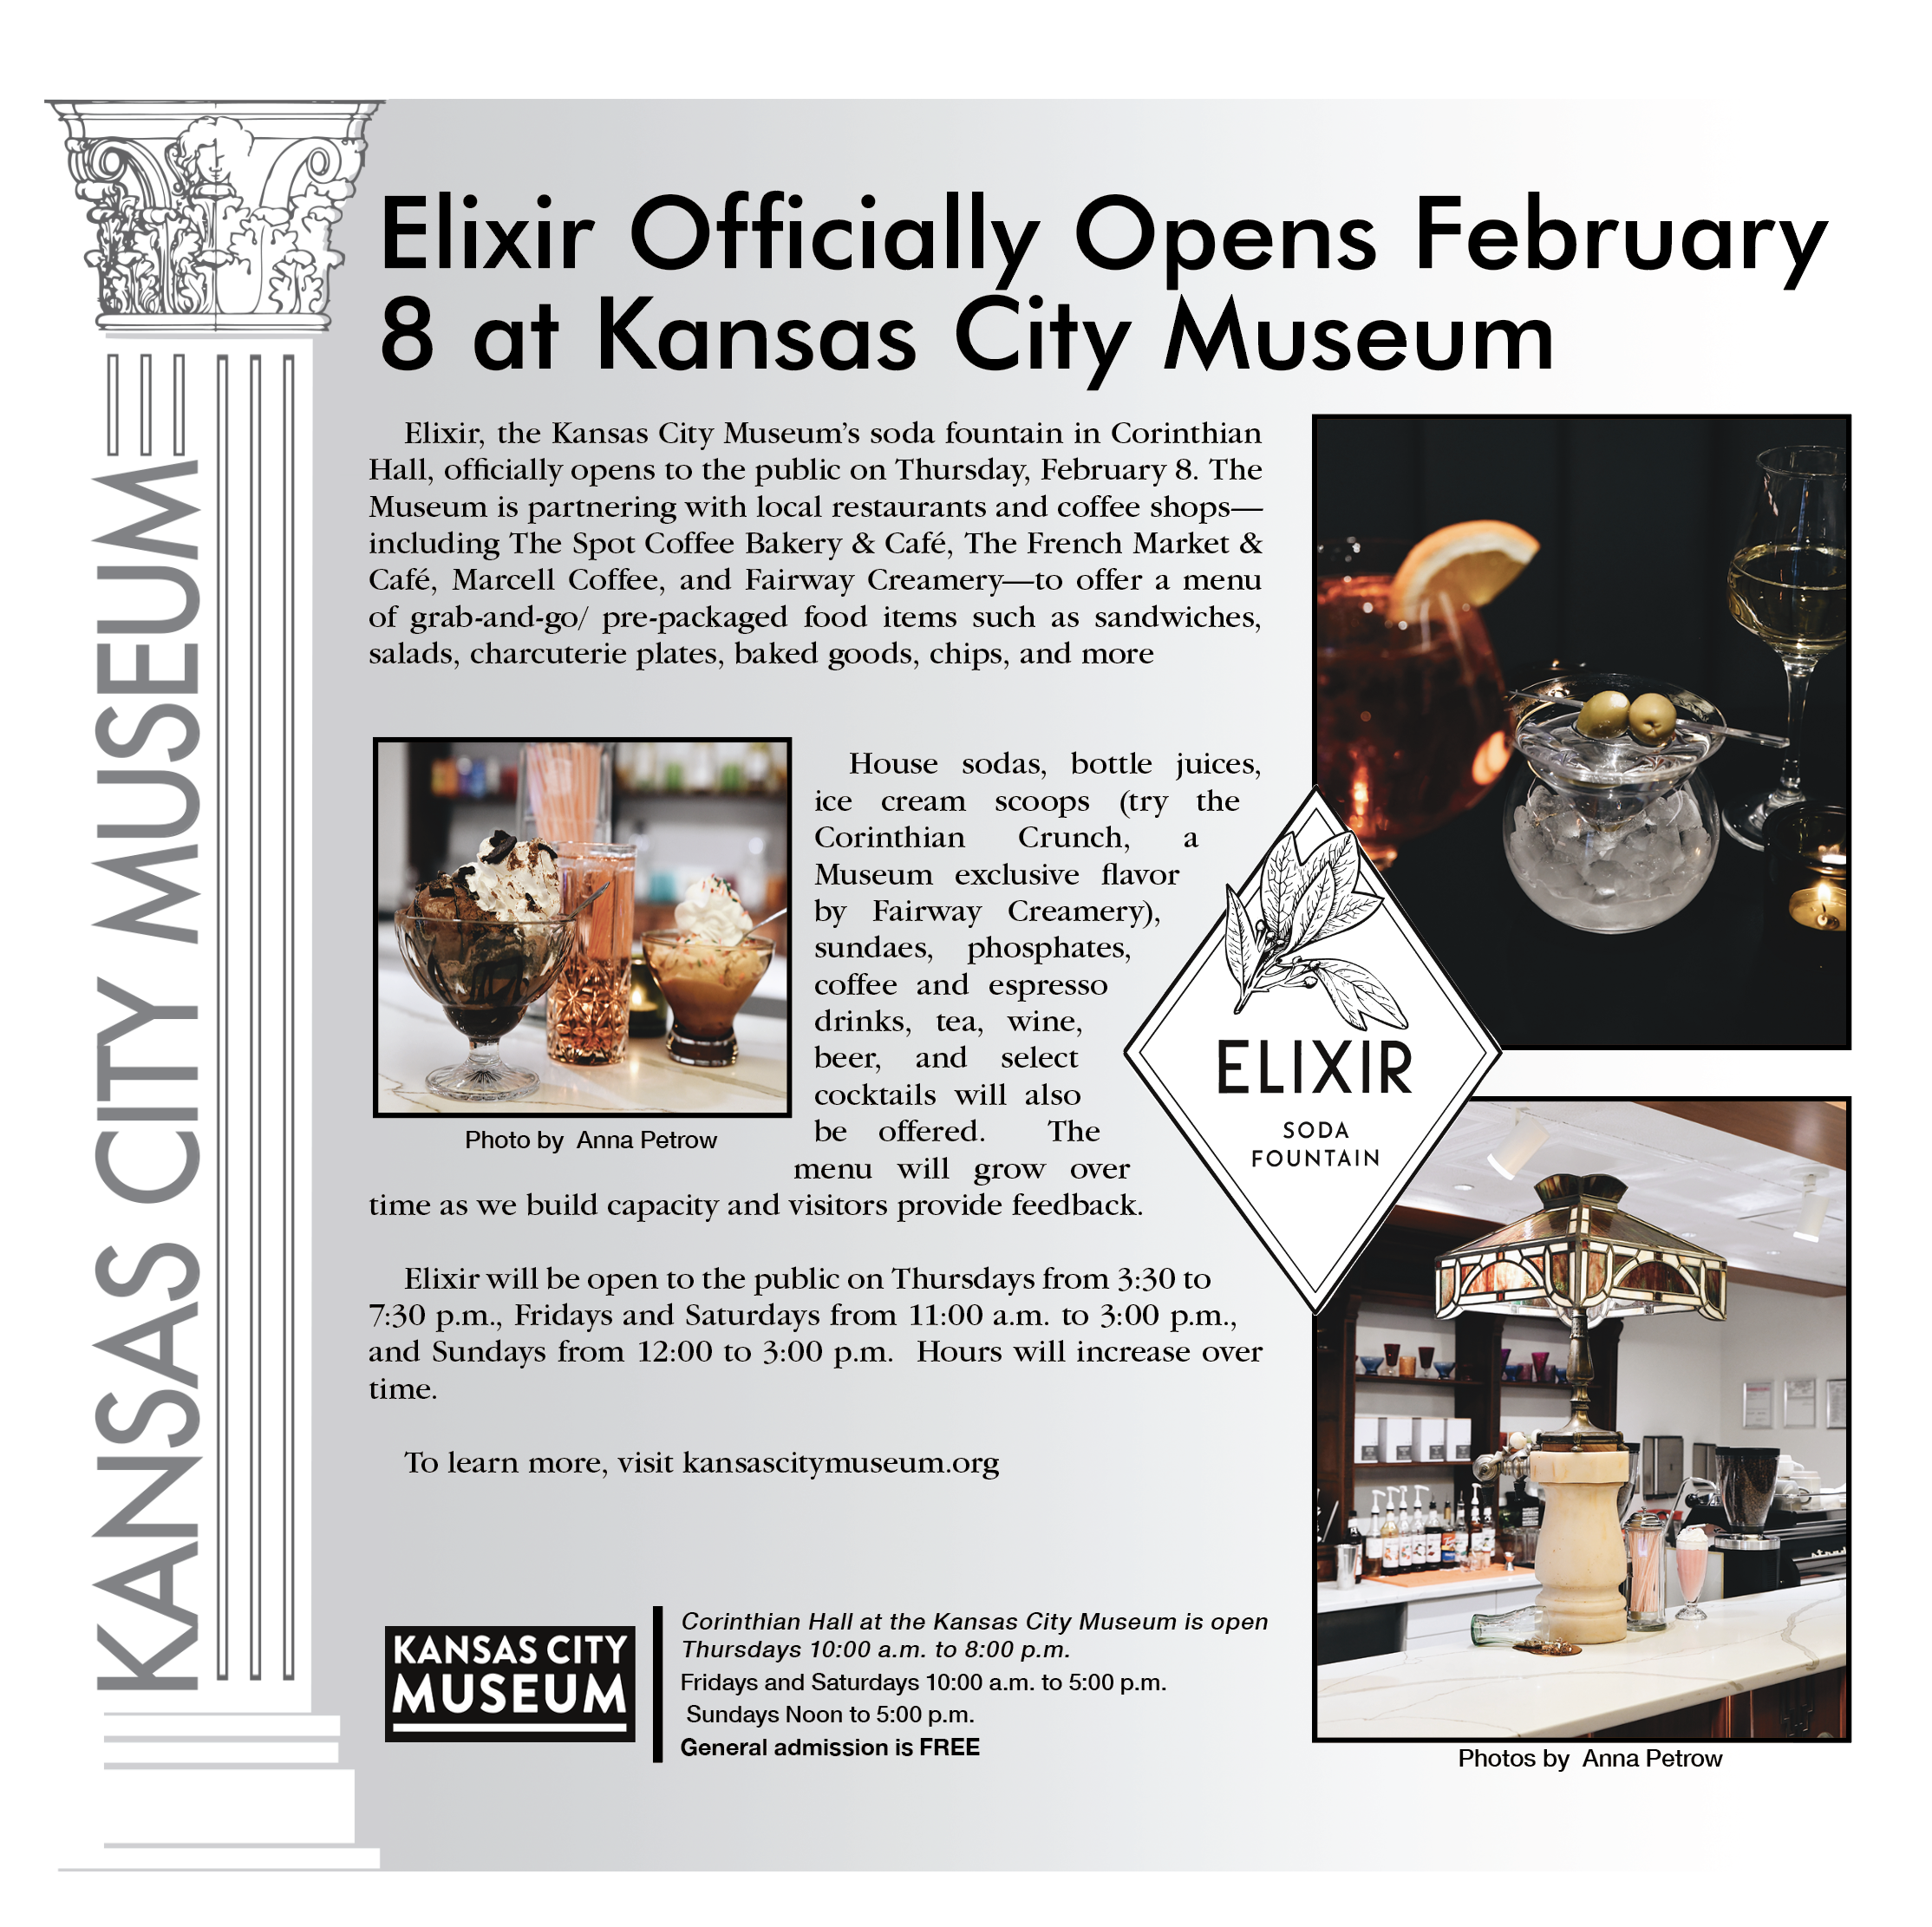 Elixir Officially Opens February 8 at Kansas City Museum